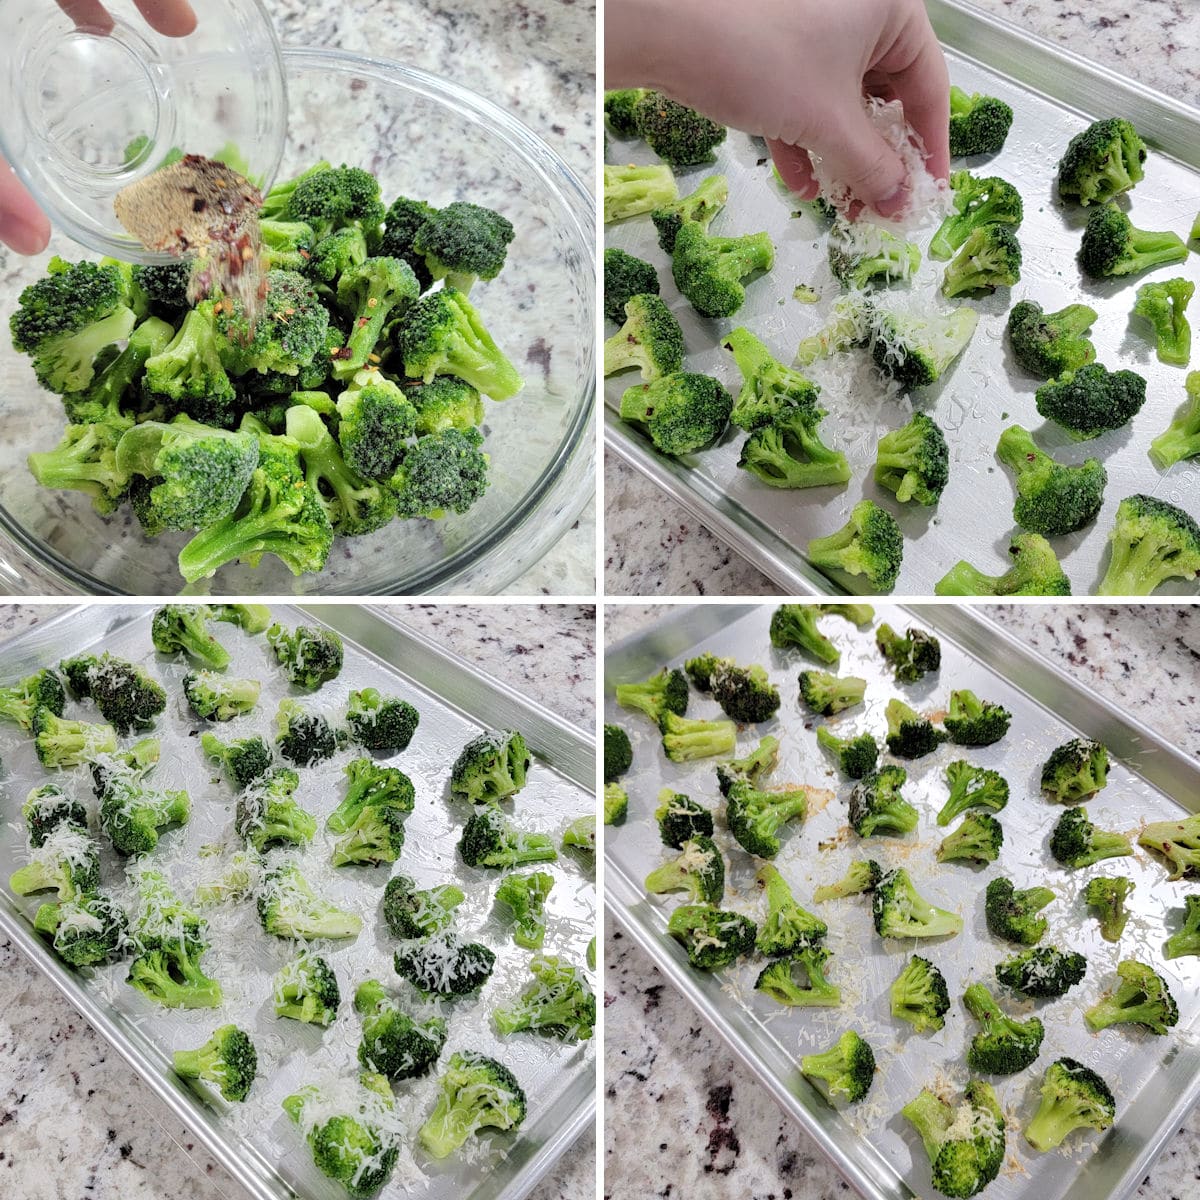 Assembling frozen broccoli florets on a metal sheet pan.